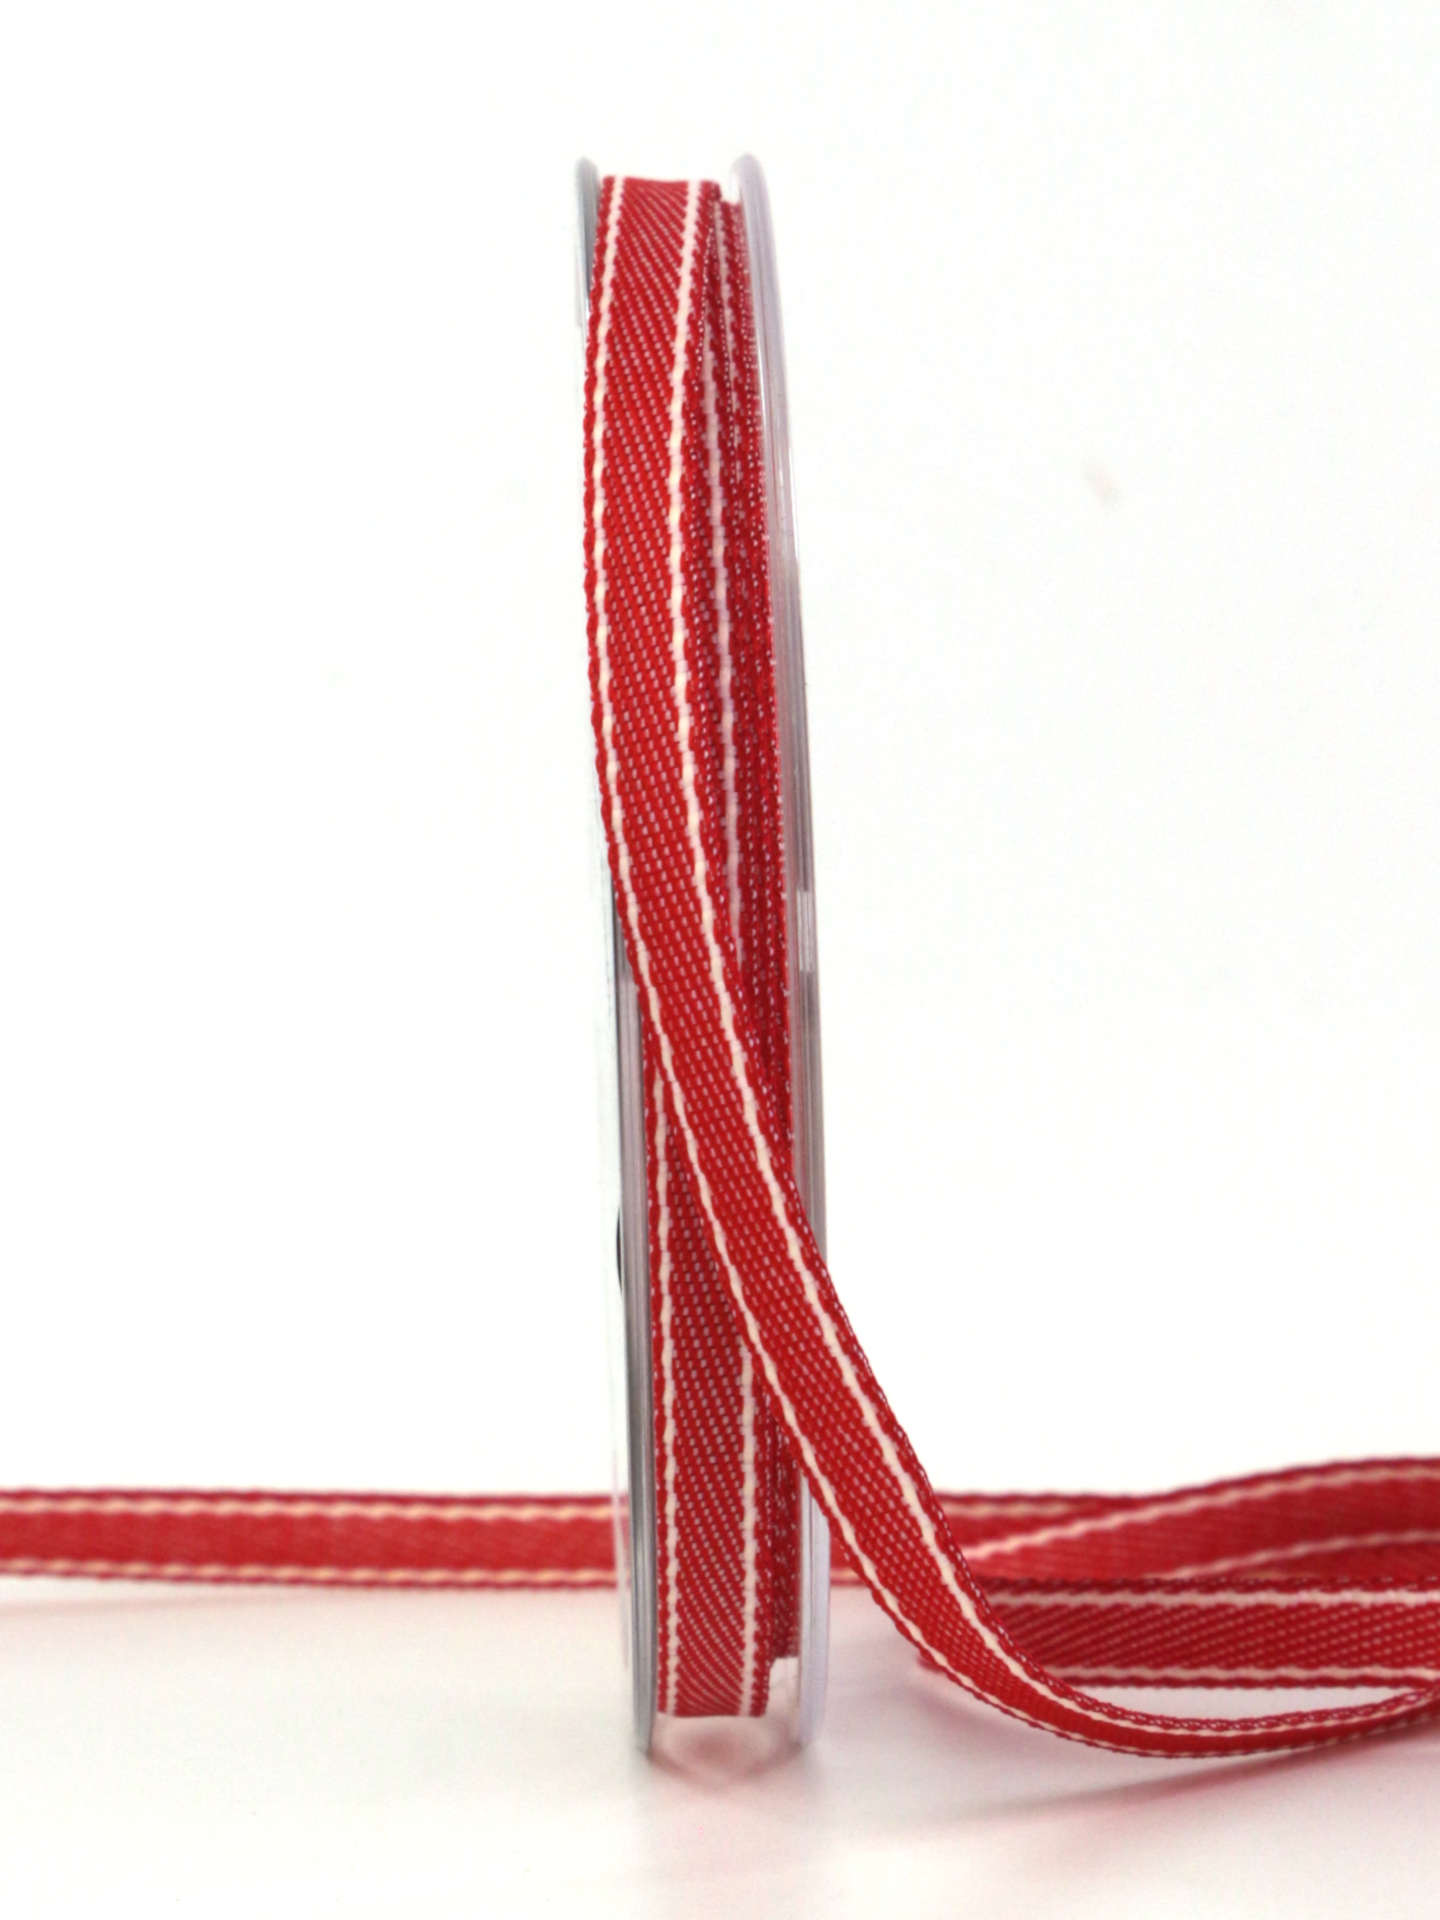 Leinenband, waschbar, rot, 7 mm breit, 20 m Rolle - geschenkband-einfarbig, geschenkband